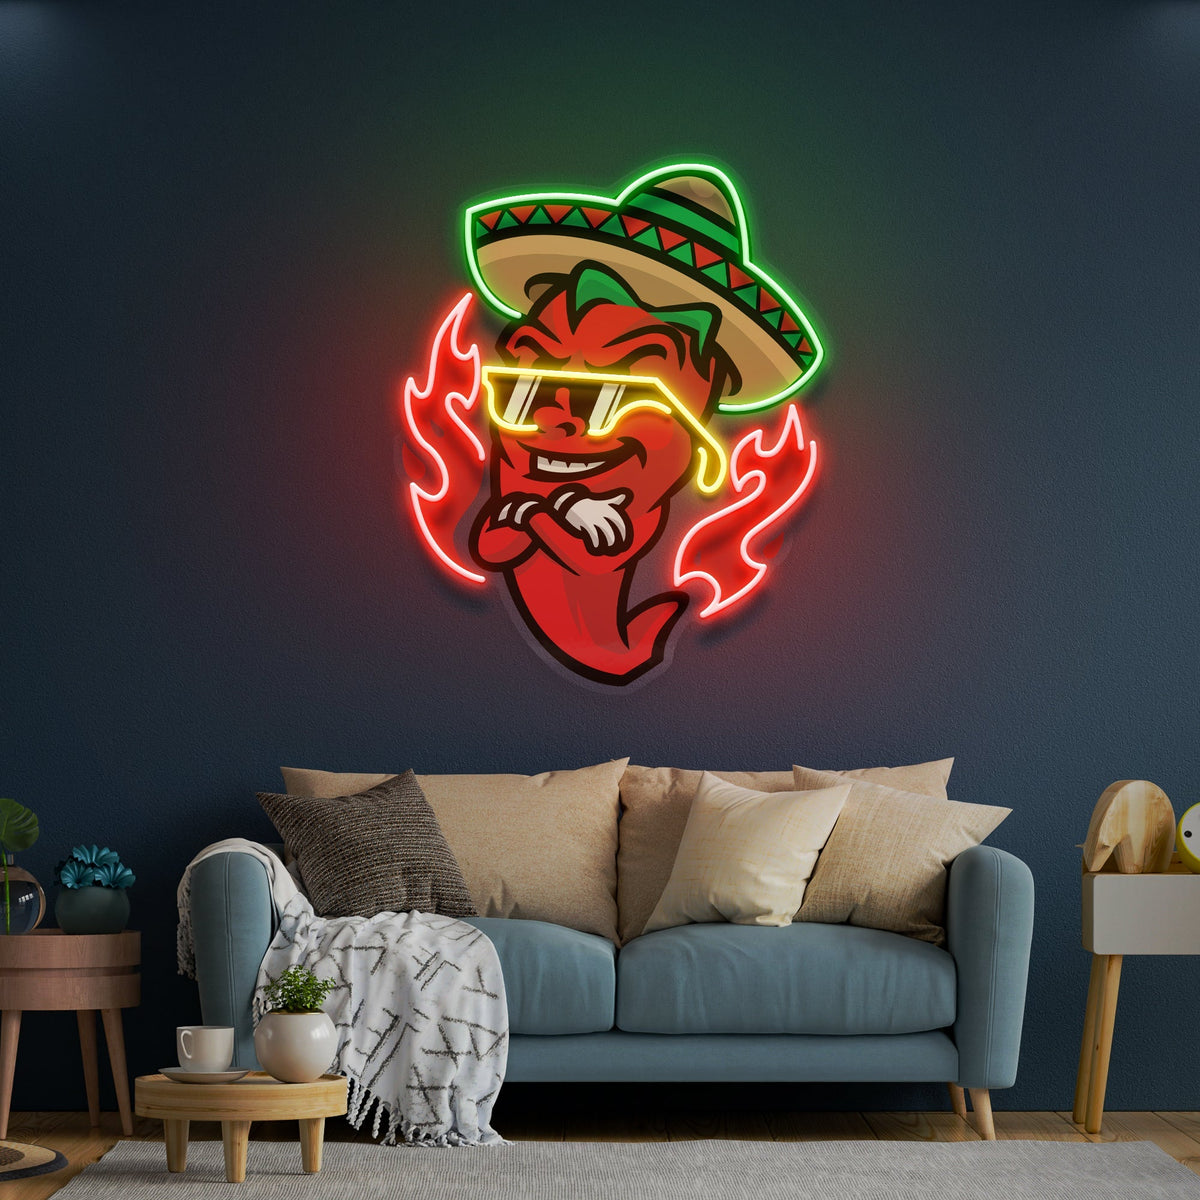 Mexican Chili Pepper Cartoon Mascot Artwork Led Neon Sign Light